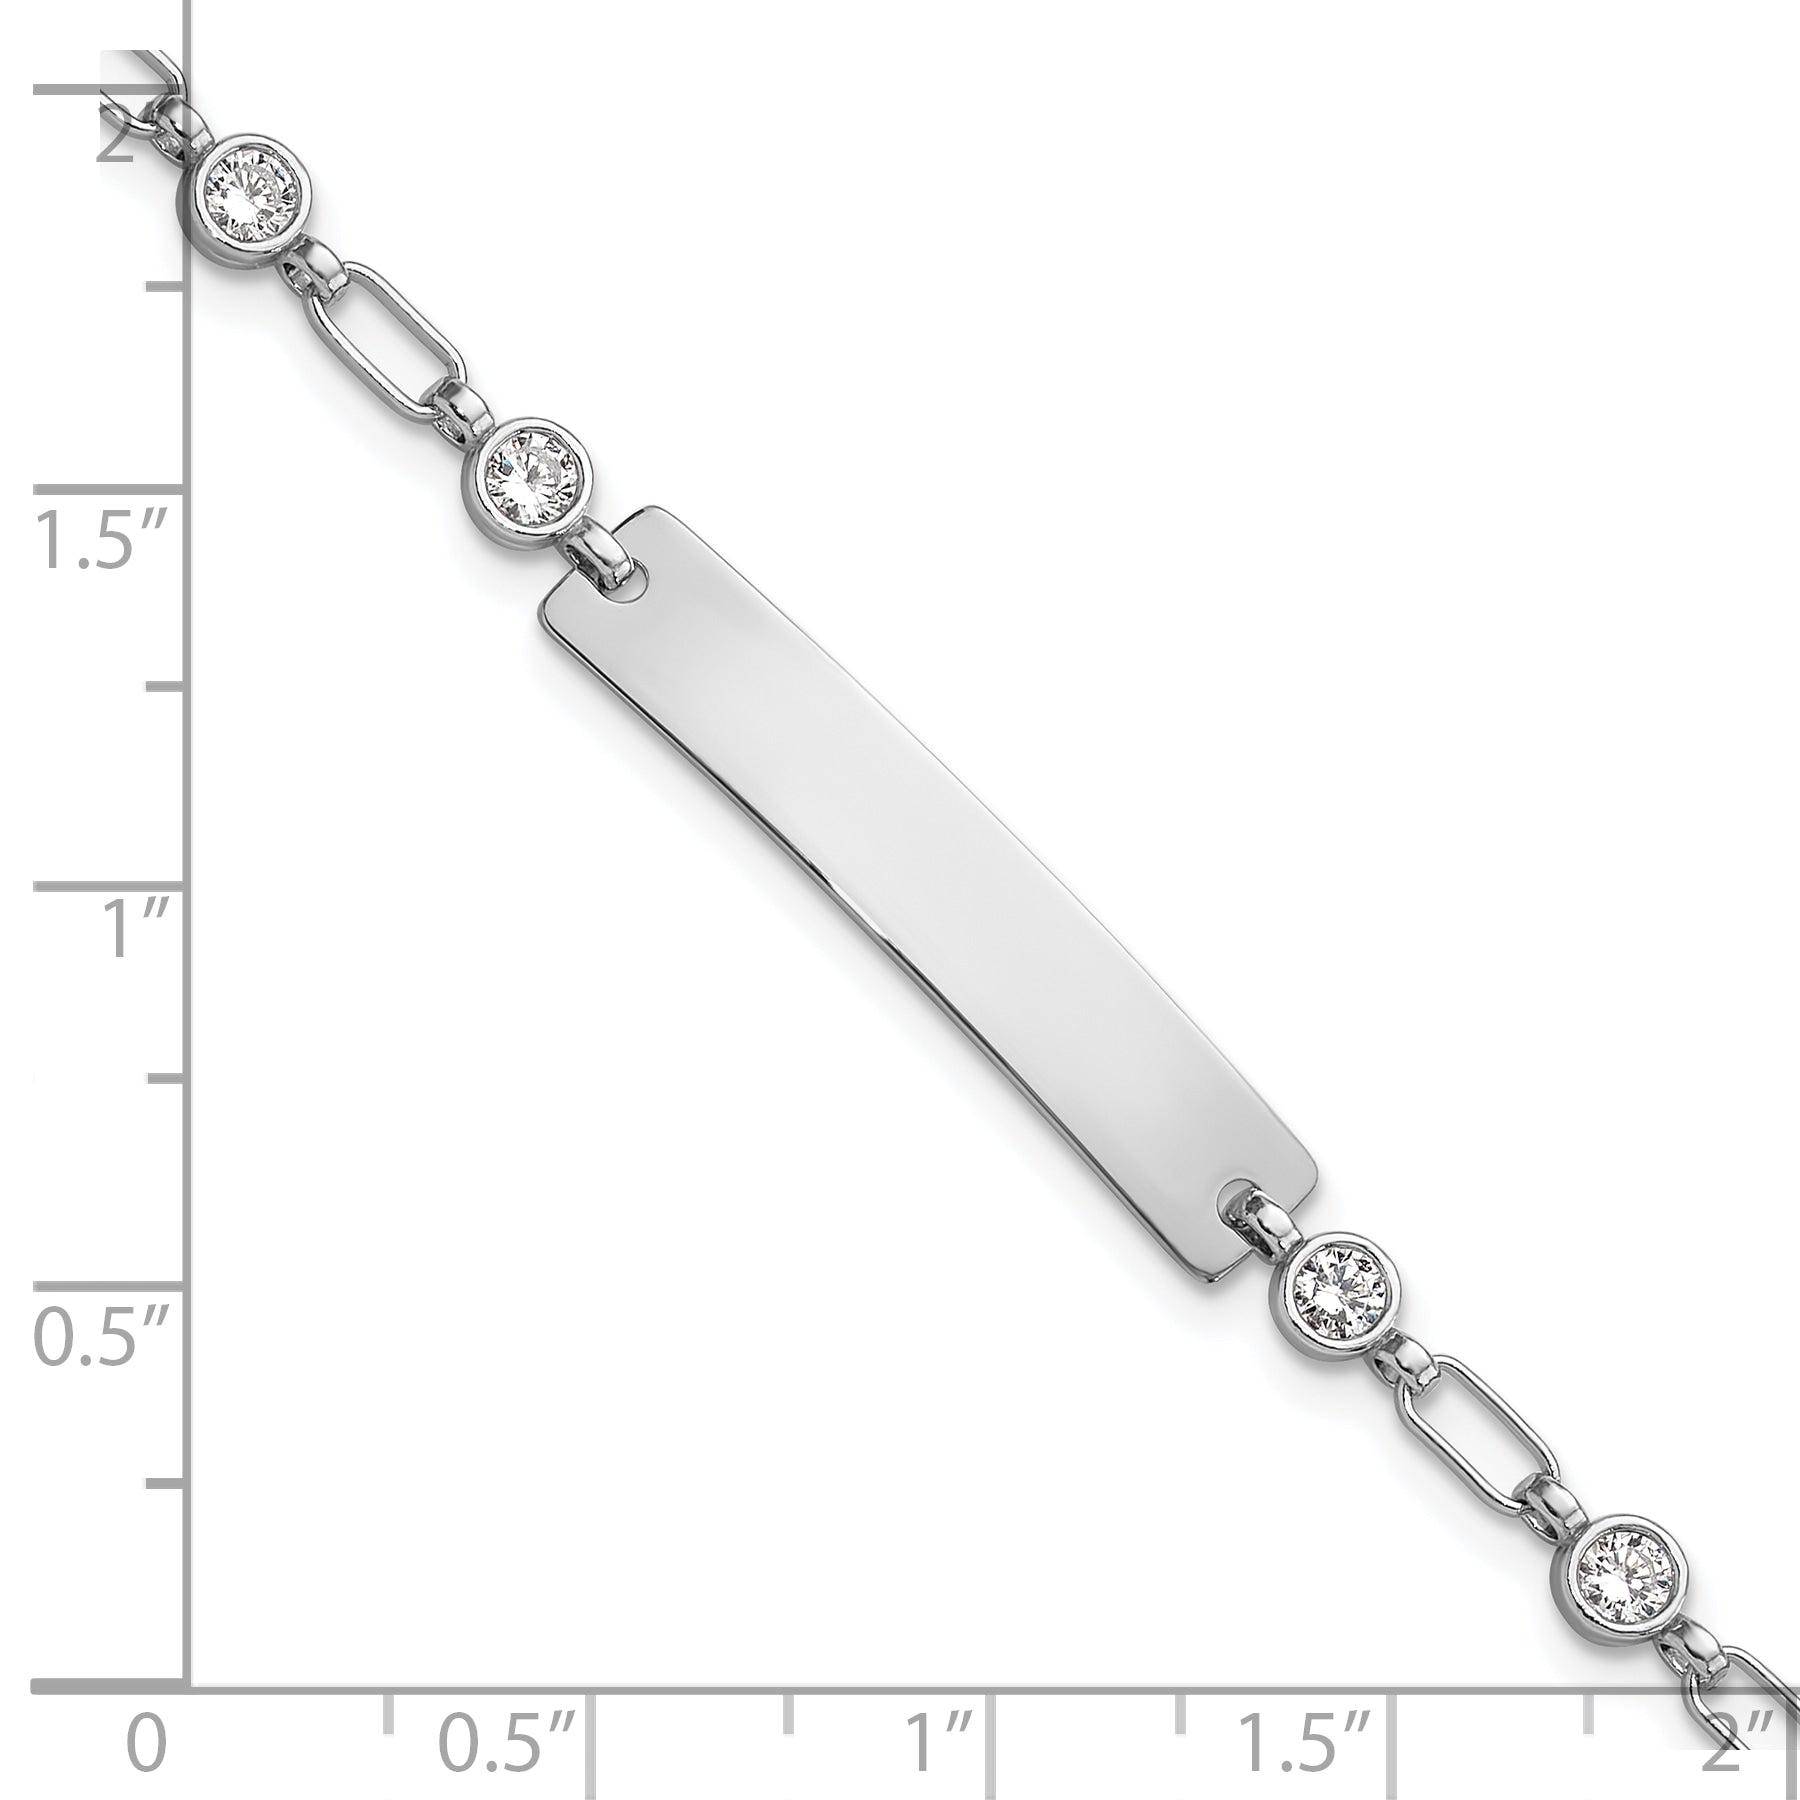 Sterling Silver Rhodium-plated 7.5 inch Bezel CZ ID Bracelet